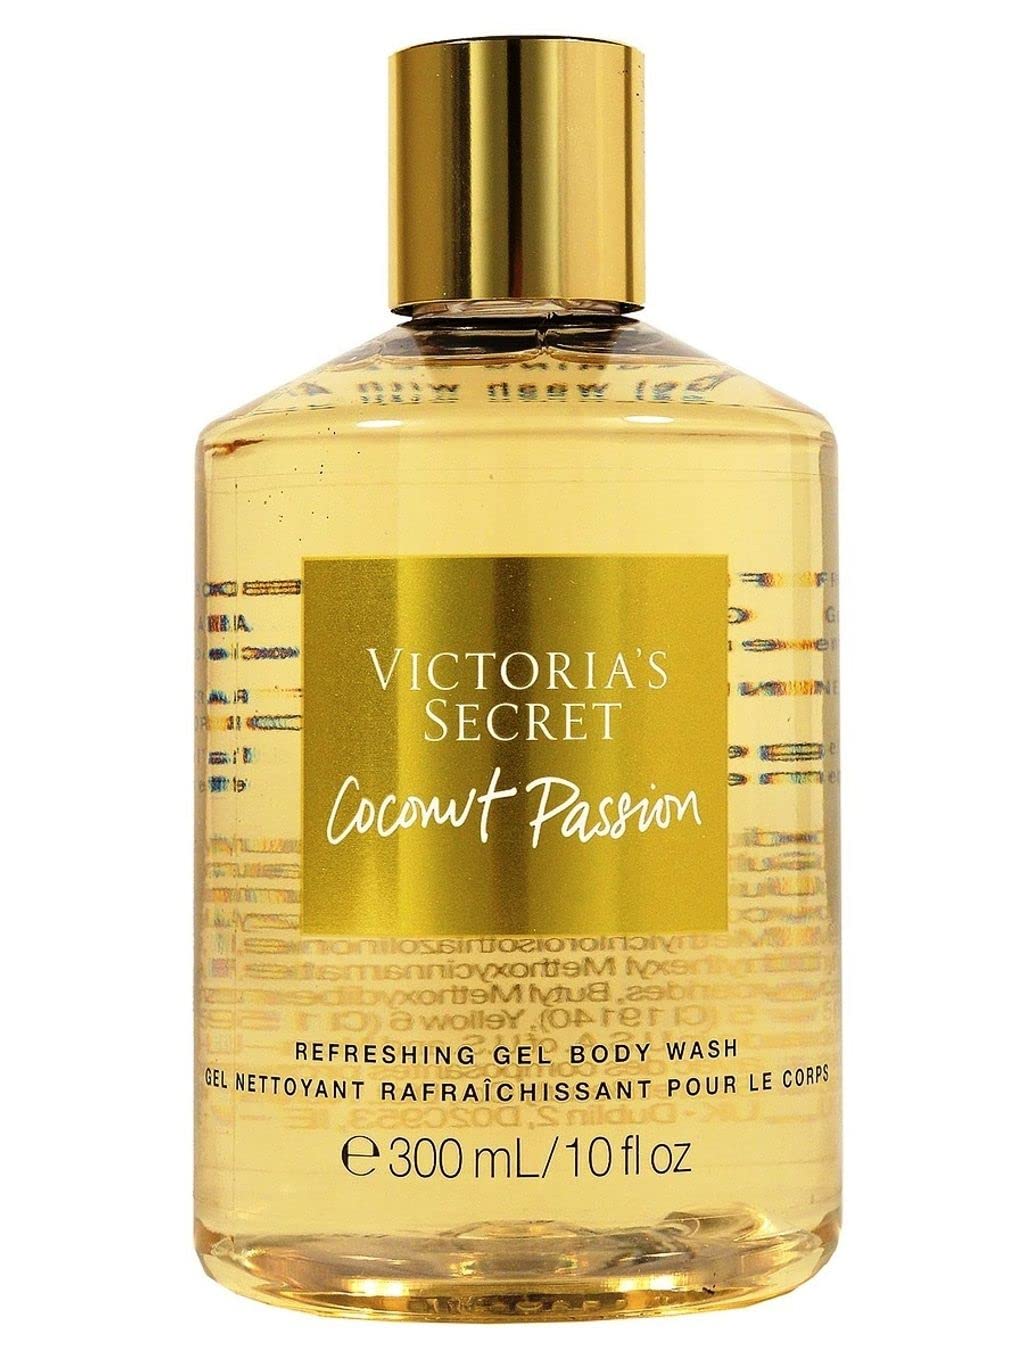 Victoria's Secret Coconut Passion Refreshing Gel Body Wash